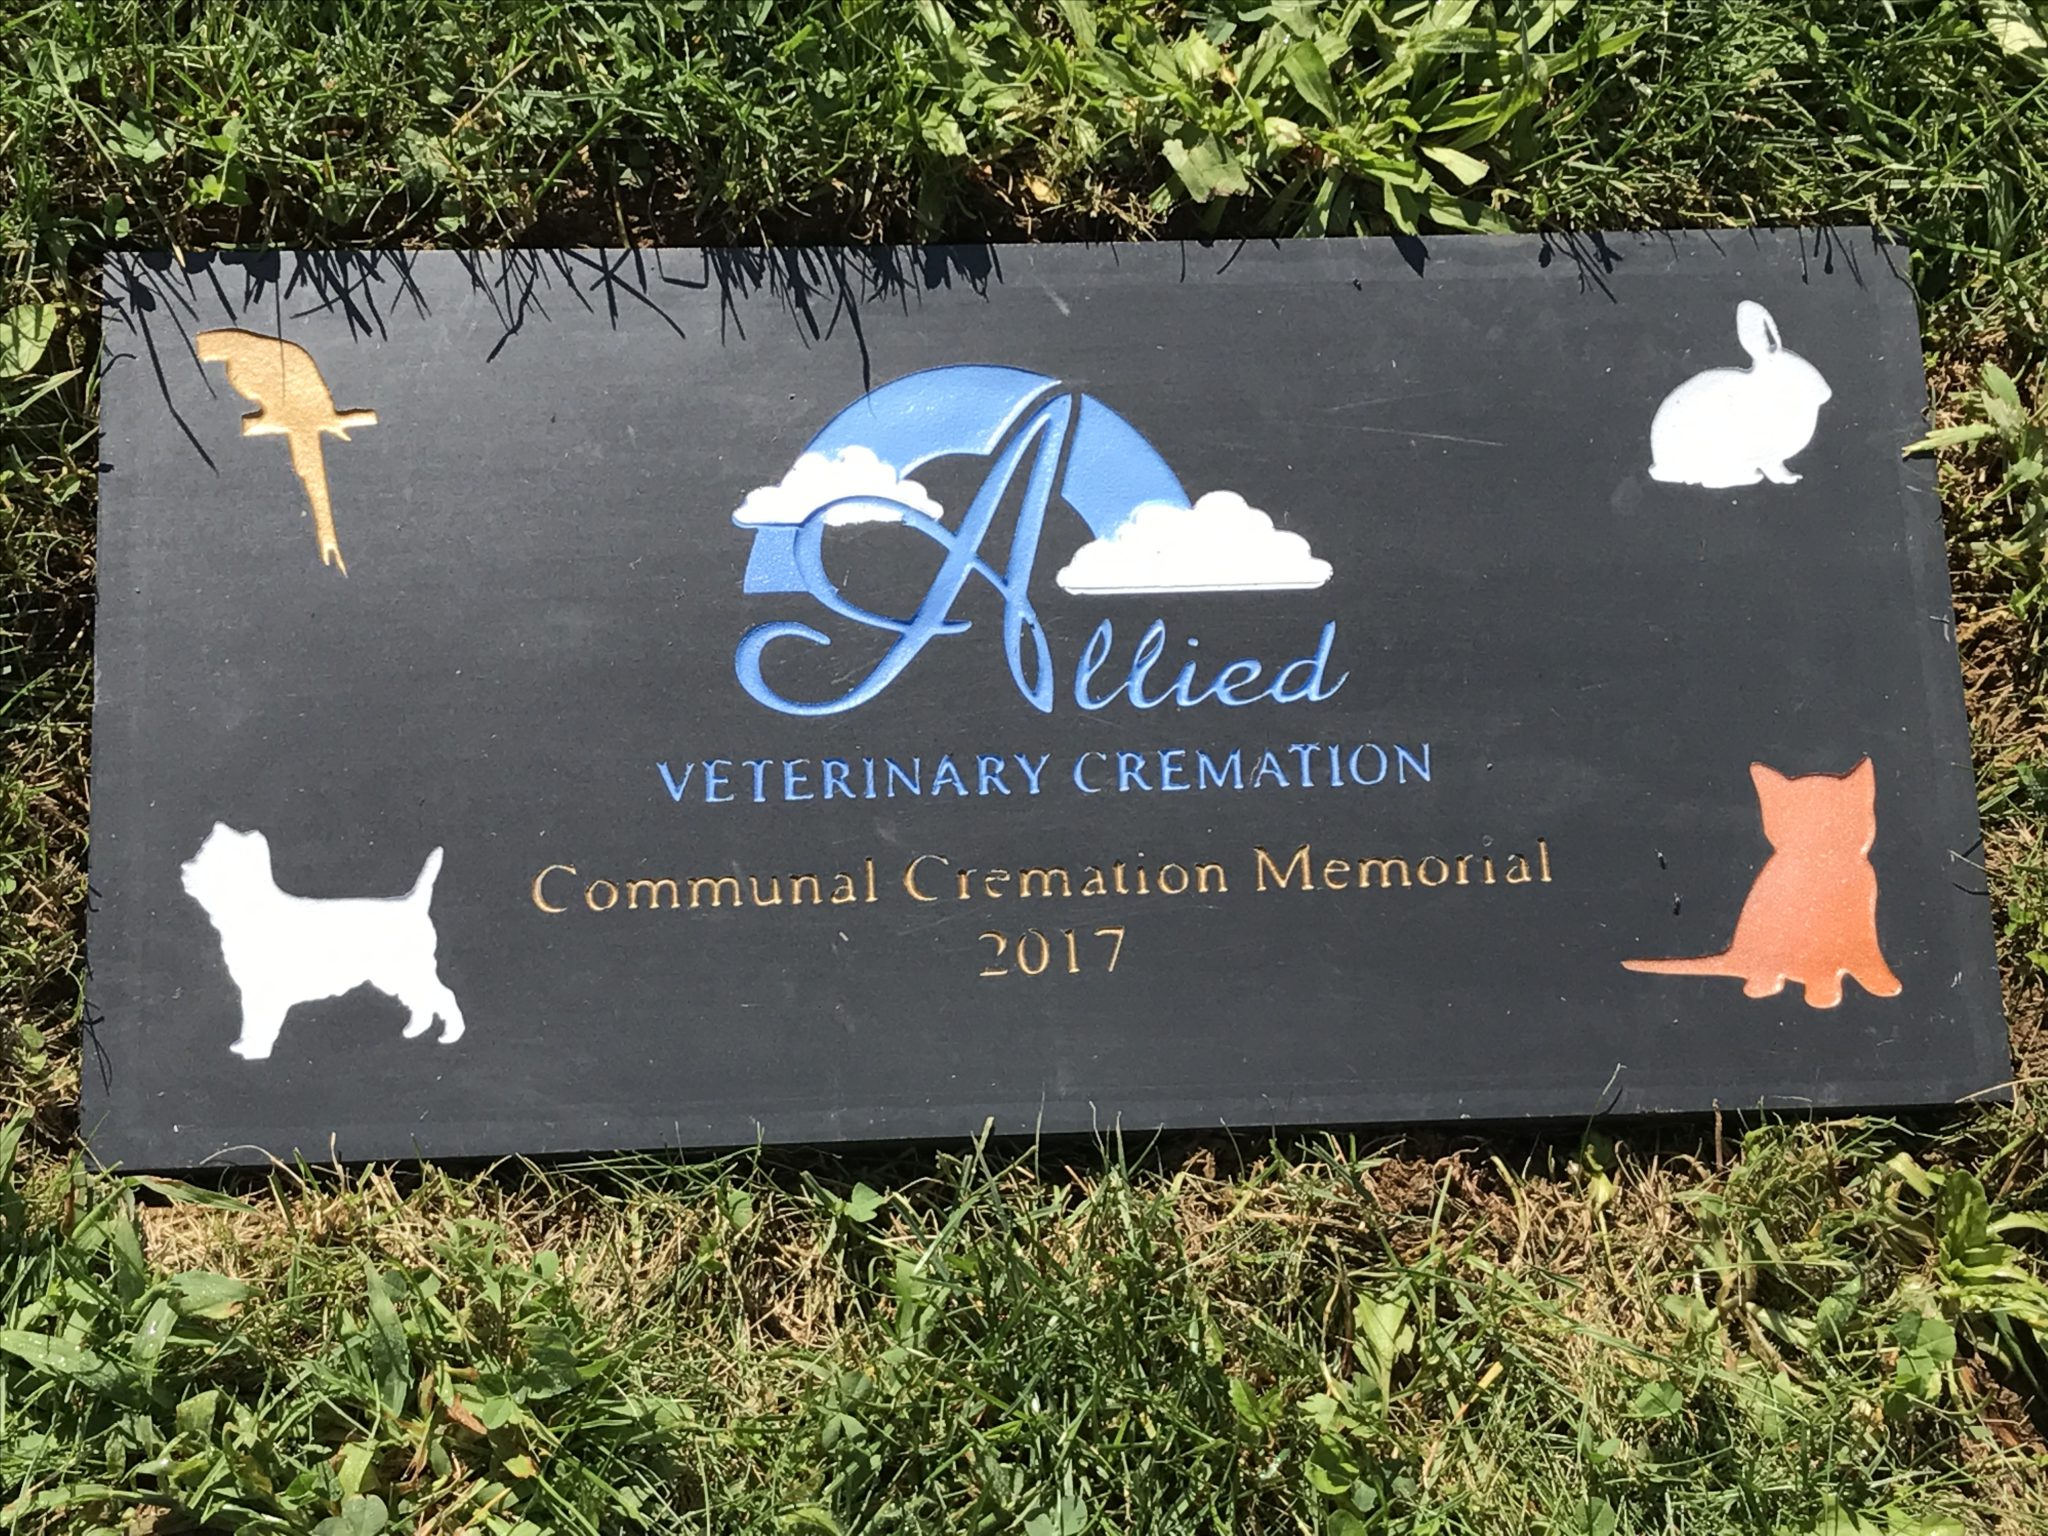 Communal Cremation Memorial - Pet gravestone - Allied Veterinary Cremation in Manheim, PA